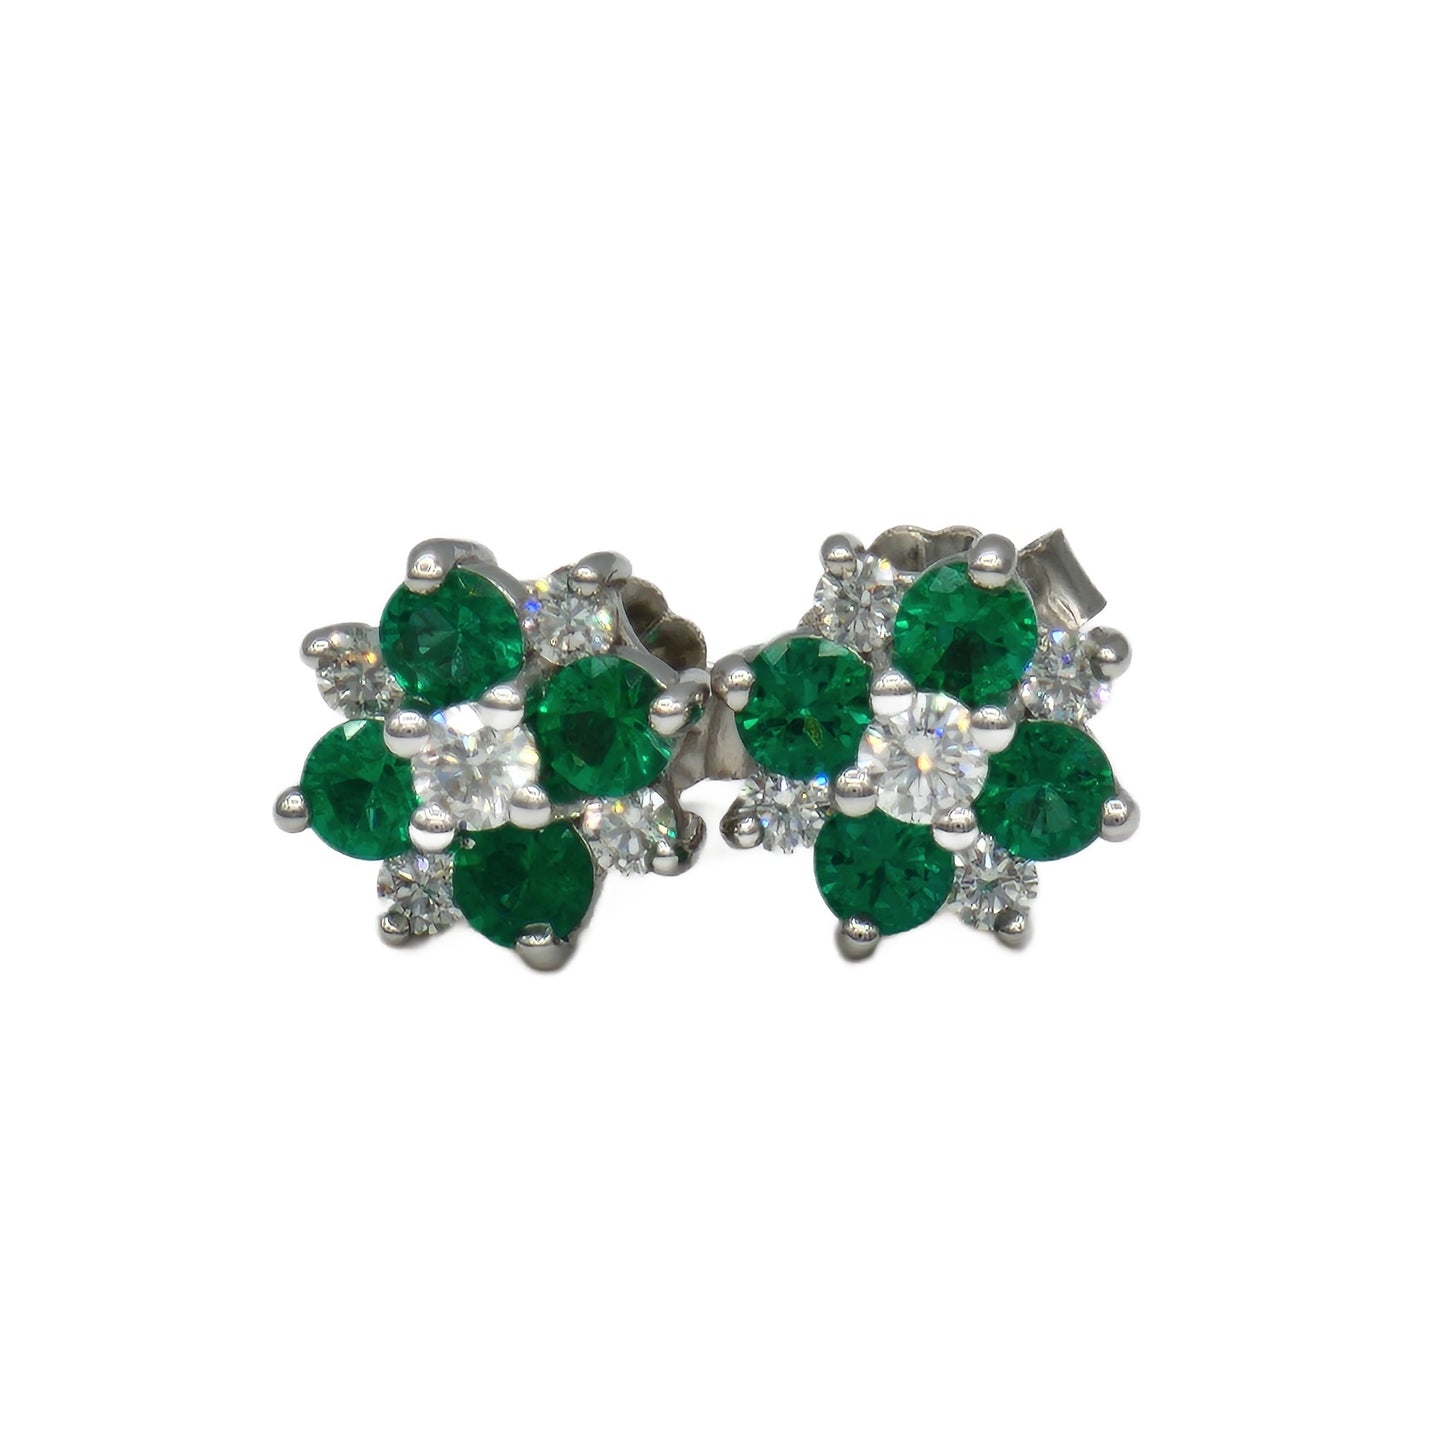 Emerald and Diamond Cluster Stud Earrings in 14K